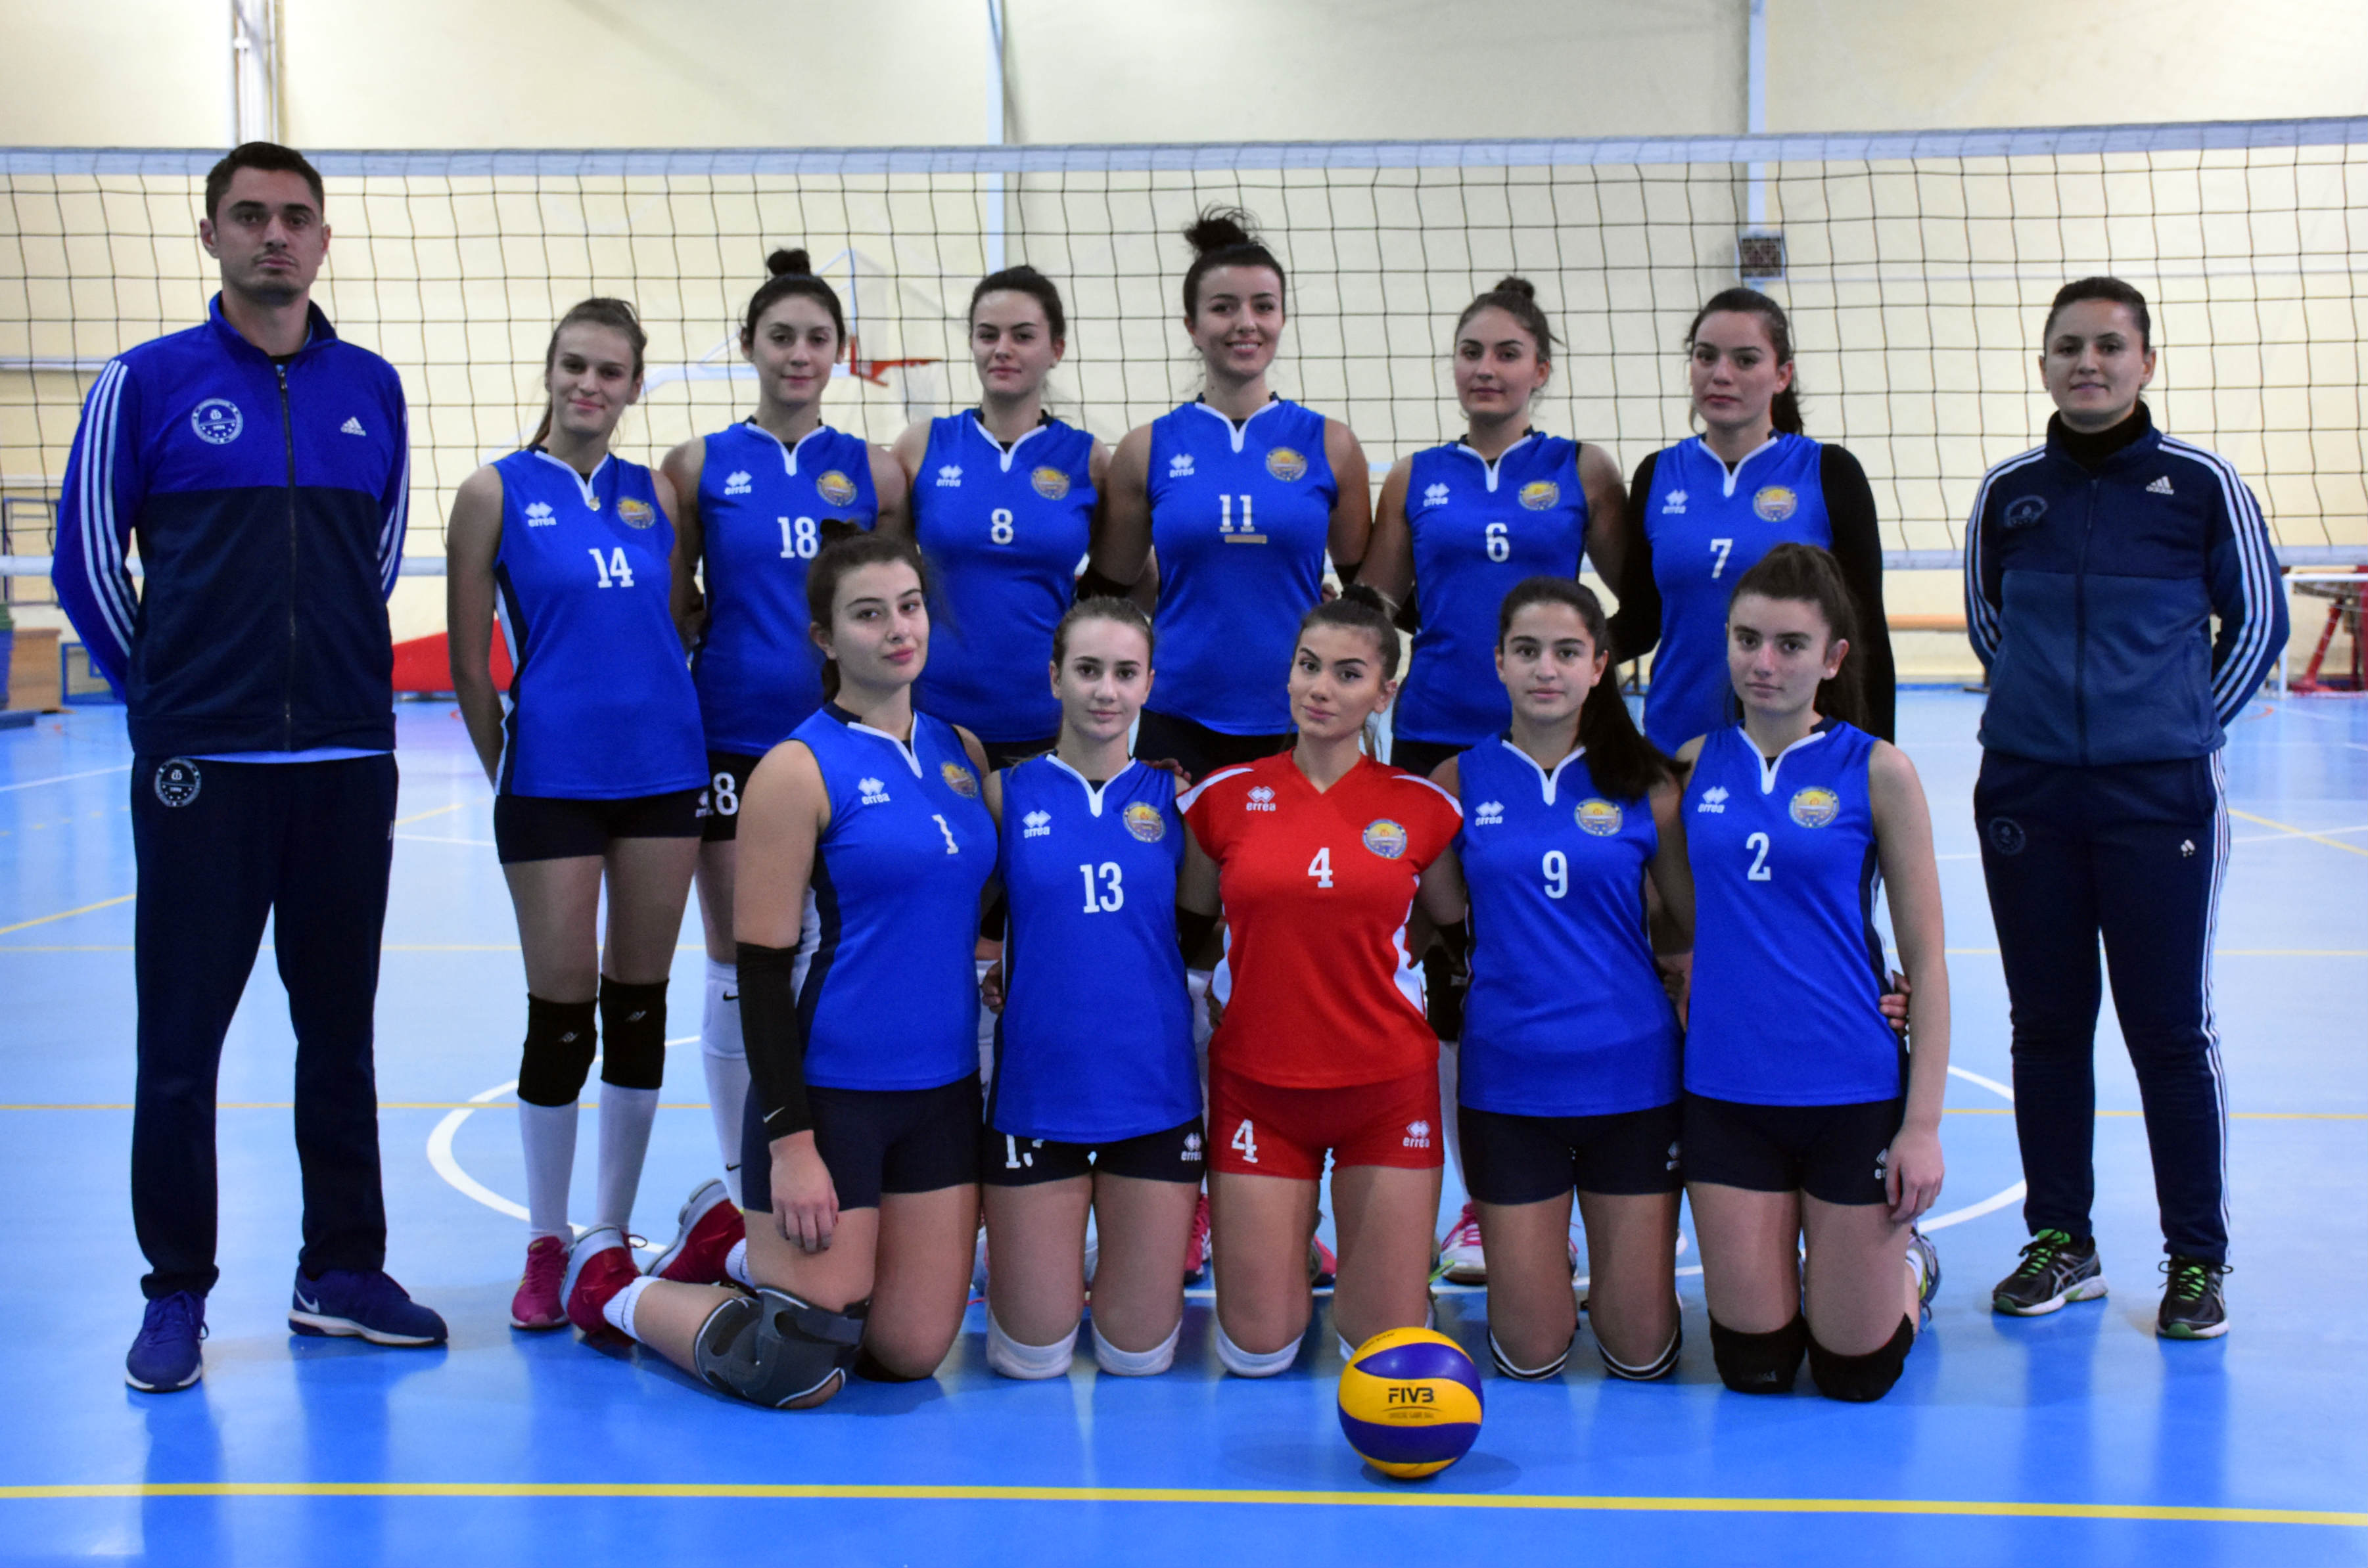 Women’s Volleyball Club “University of Tetova” won as a guest team ...